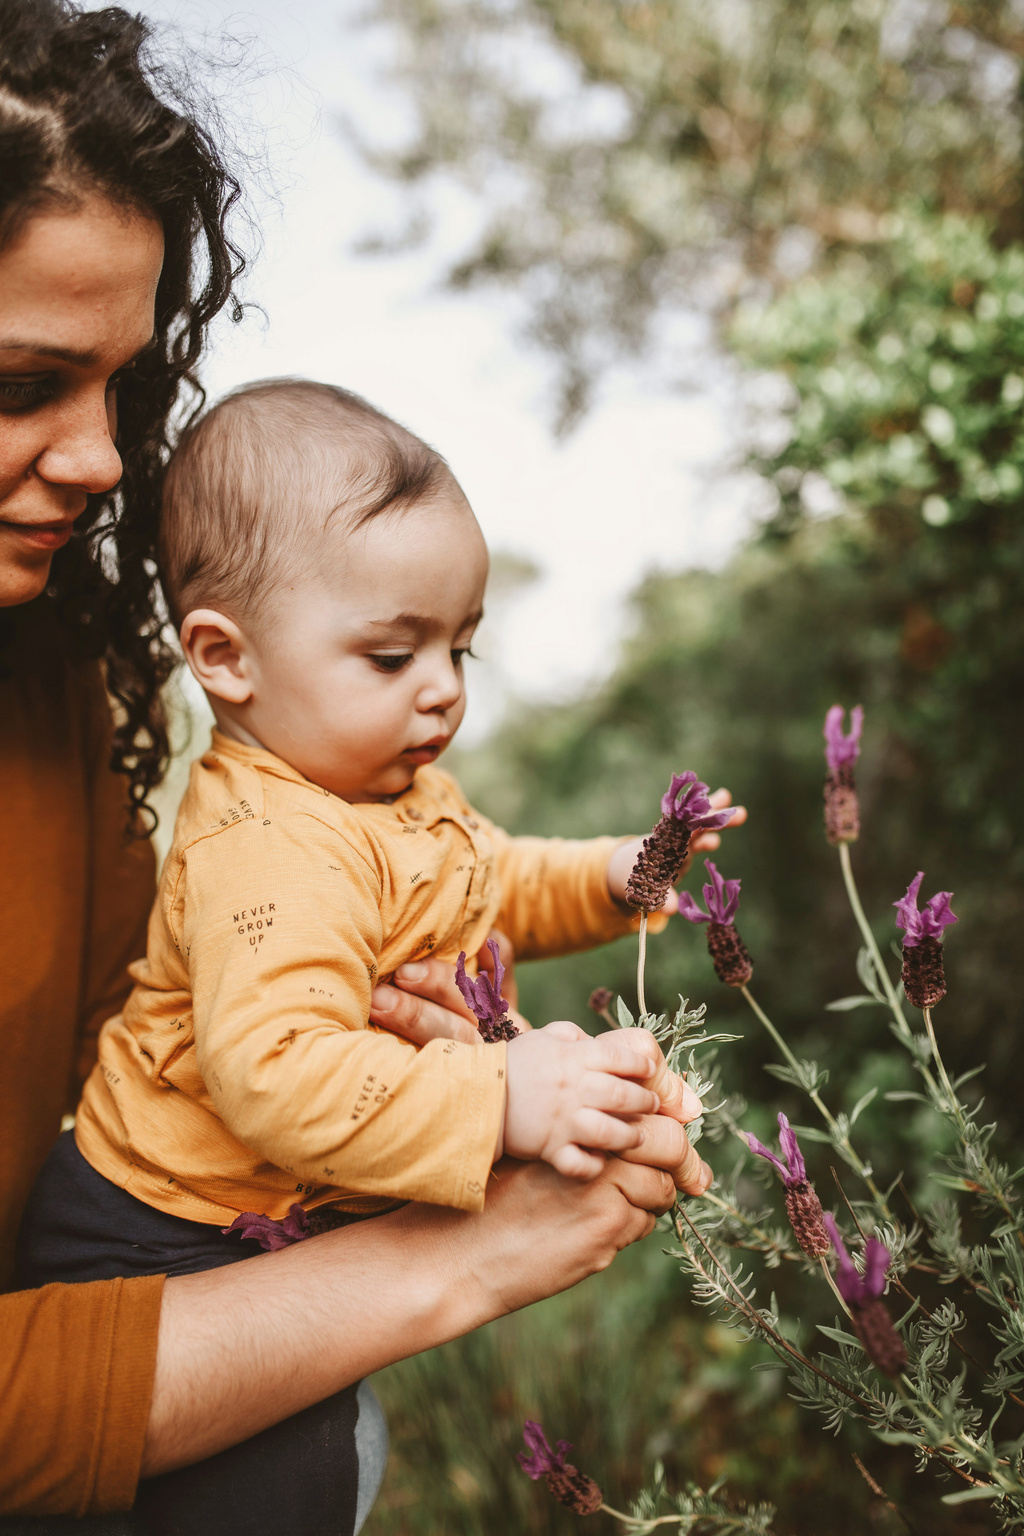 Humana Baby pflückt Blumen mit Mama